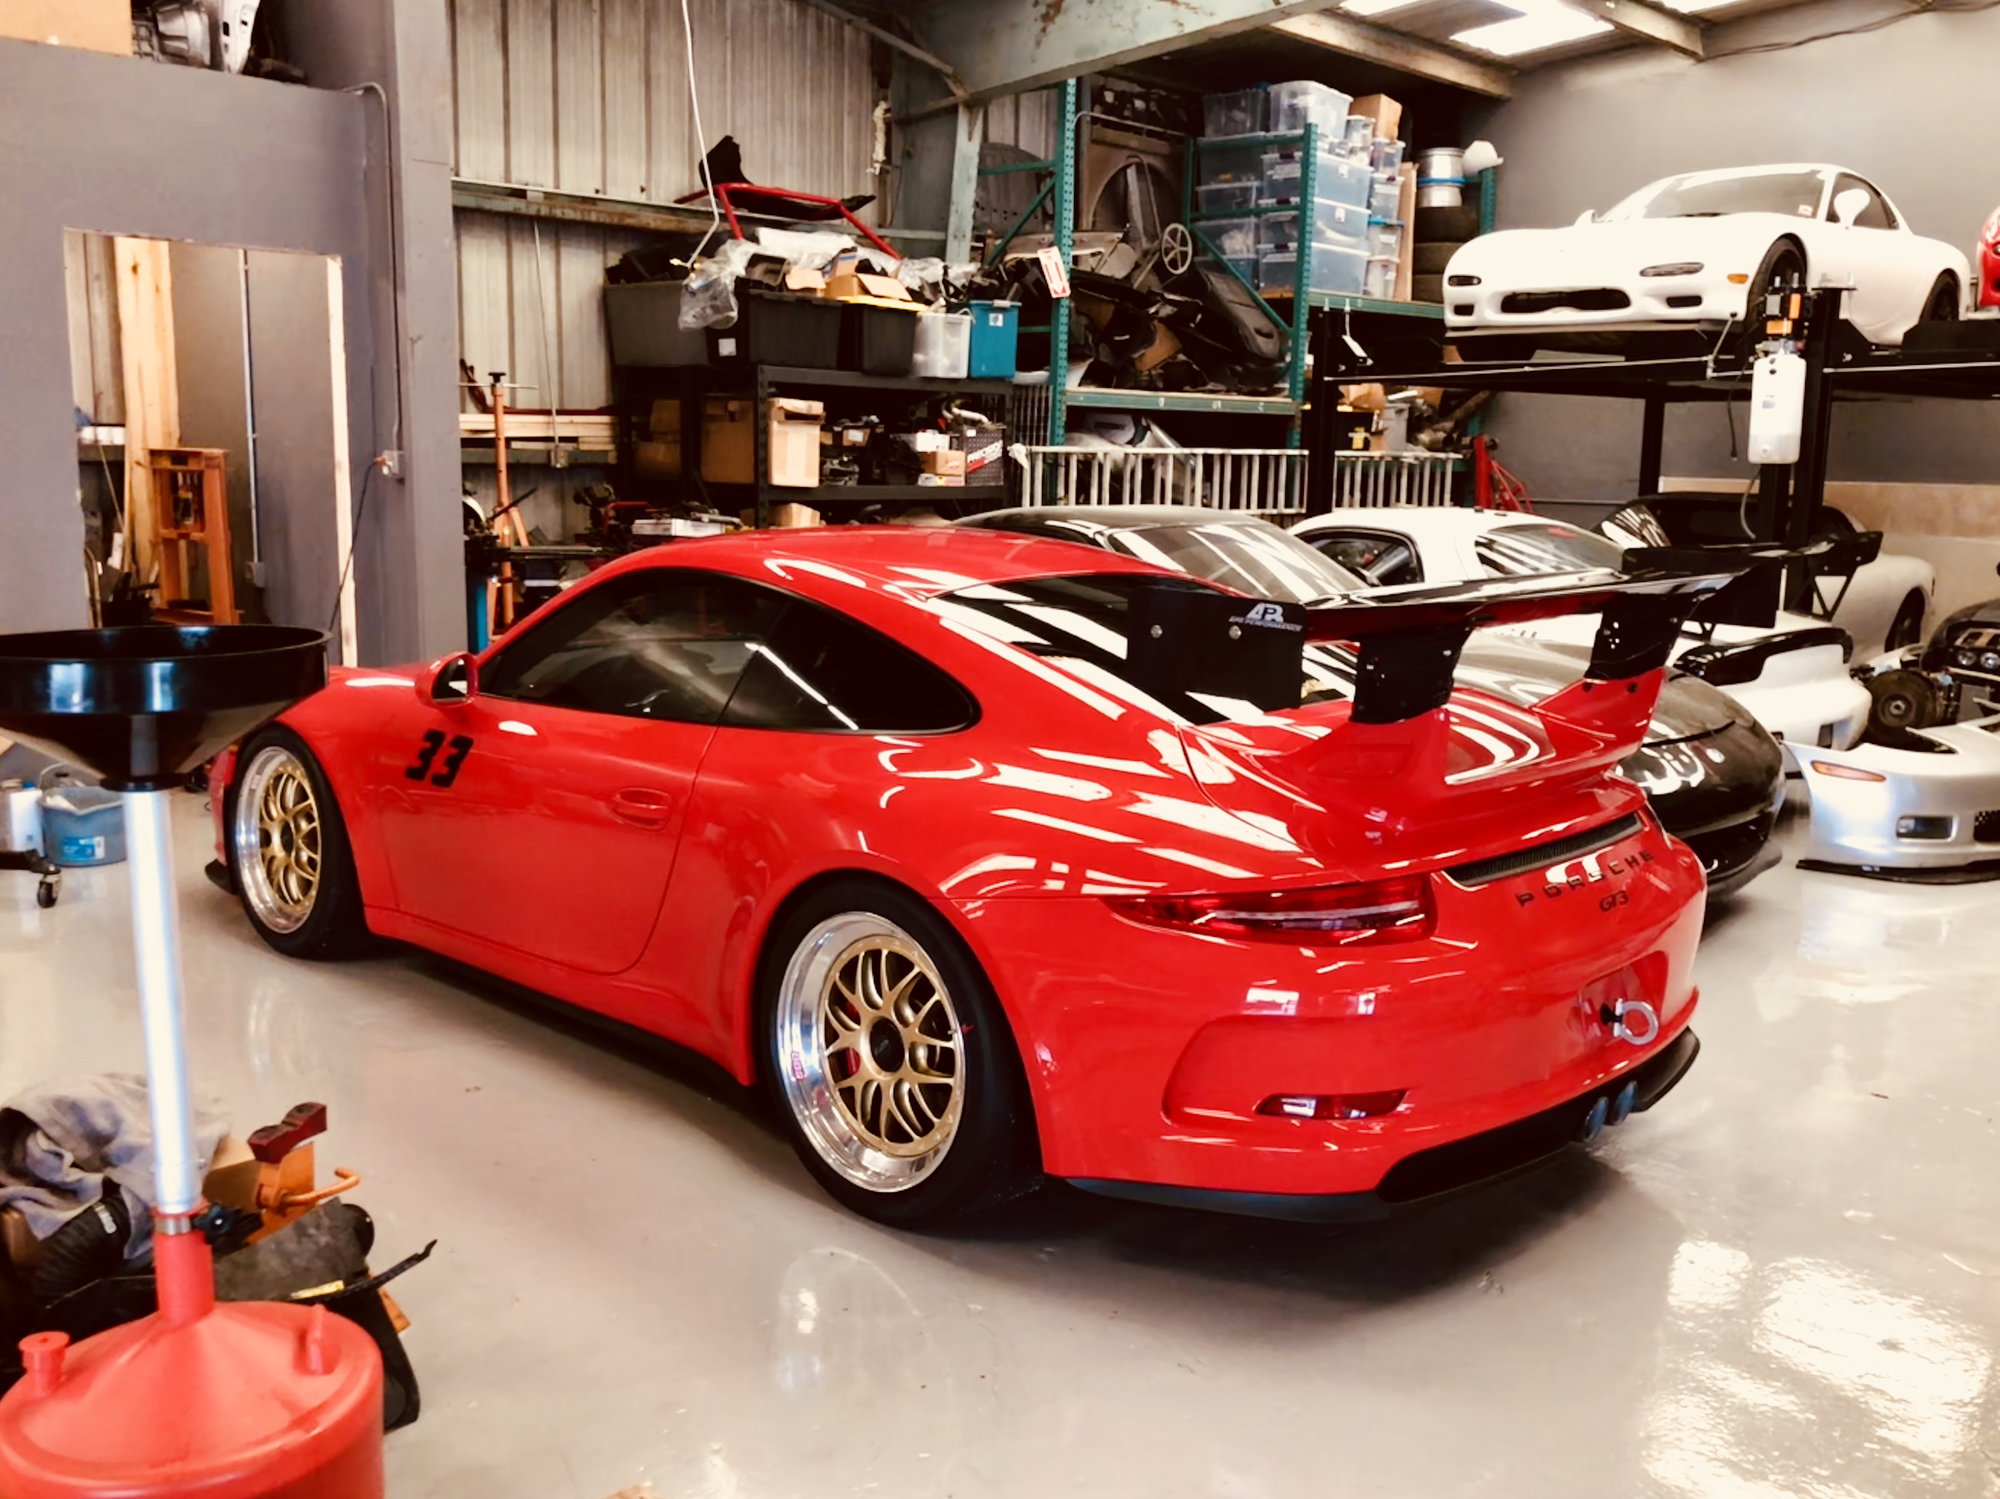 2015 Porsche GT3 - Clean out for 991.1 Gt3 - New Orleans, LA 70002, United States